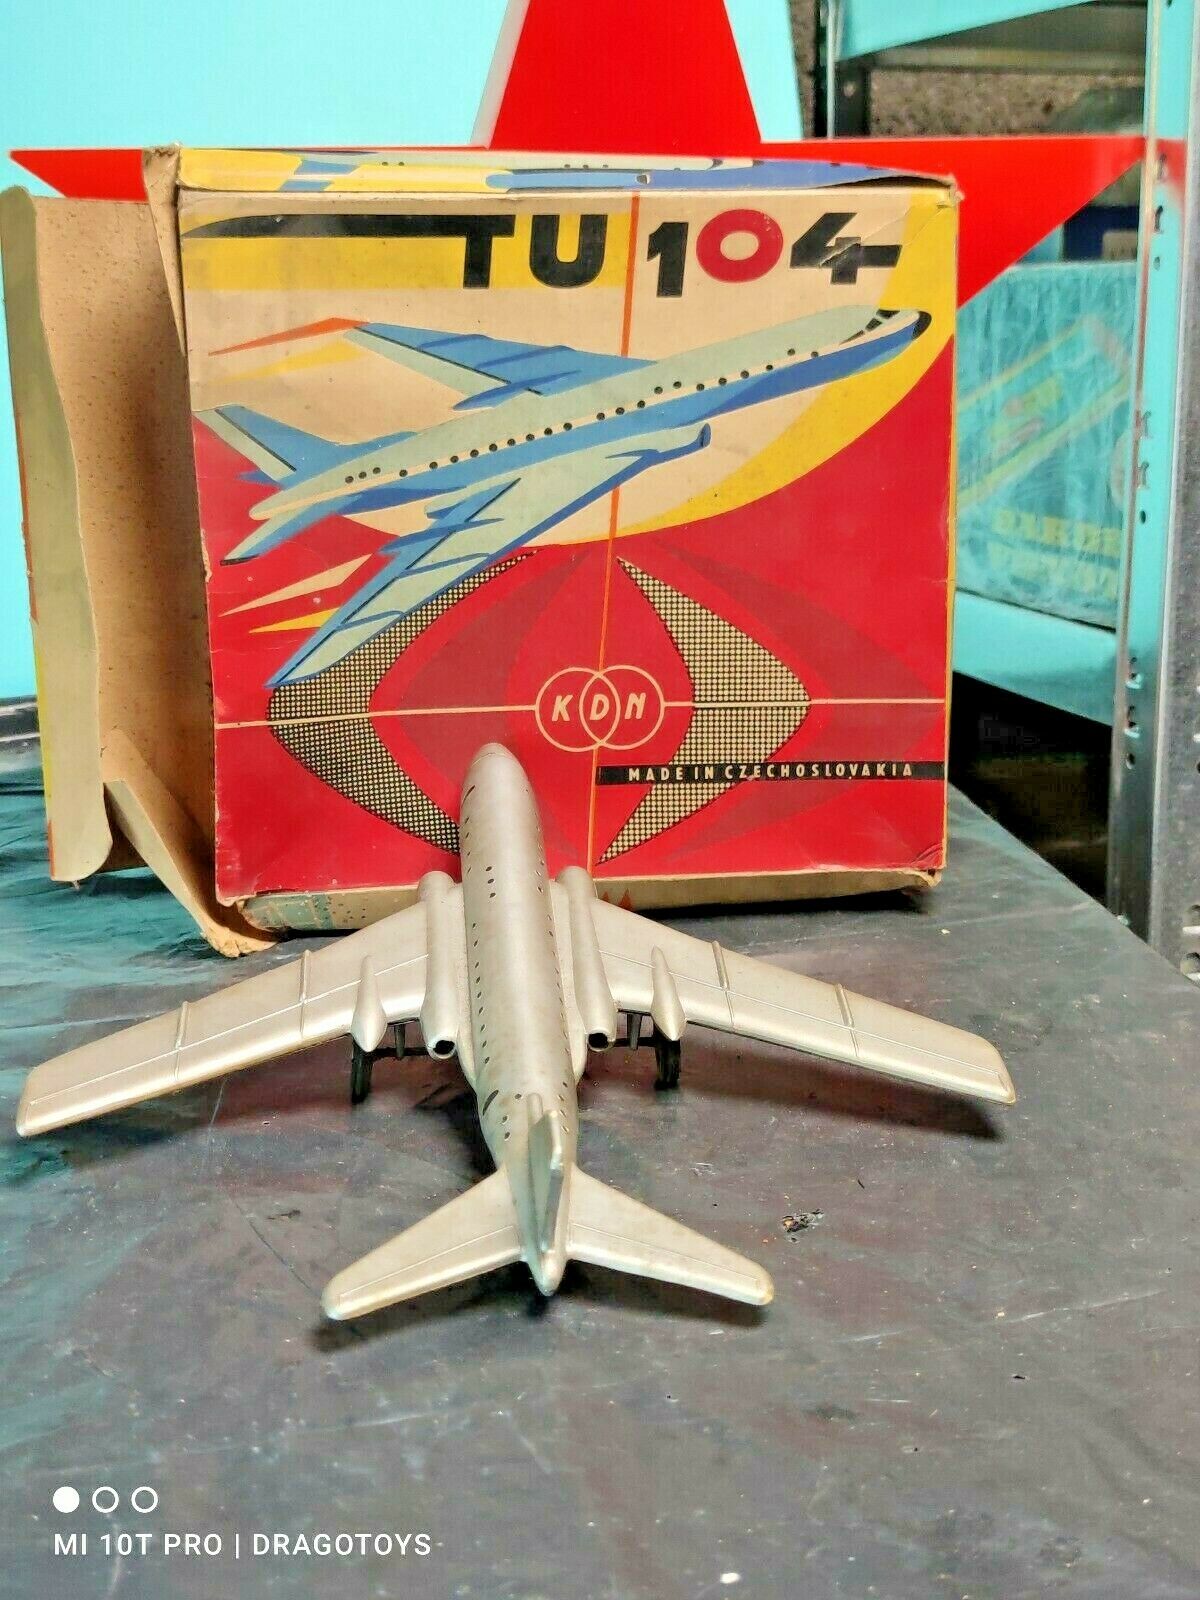 Vintage Toy Airplane Tu 104 Jet Friction Kdn Czech Republic Original Box Works